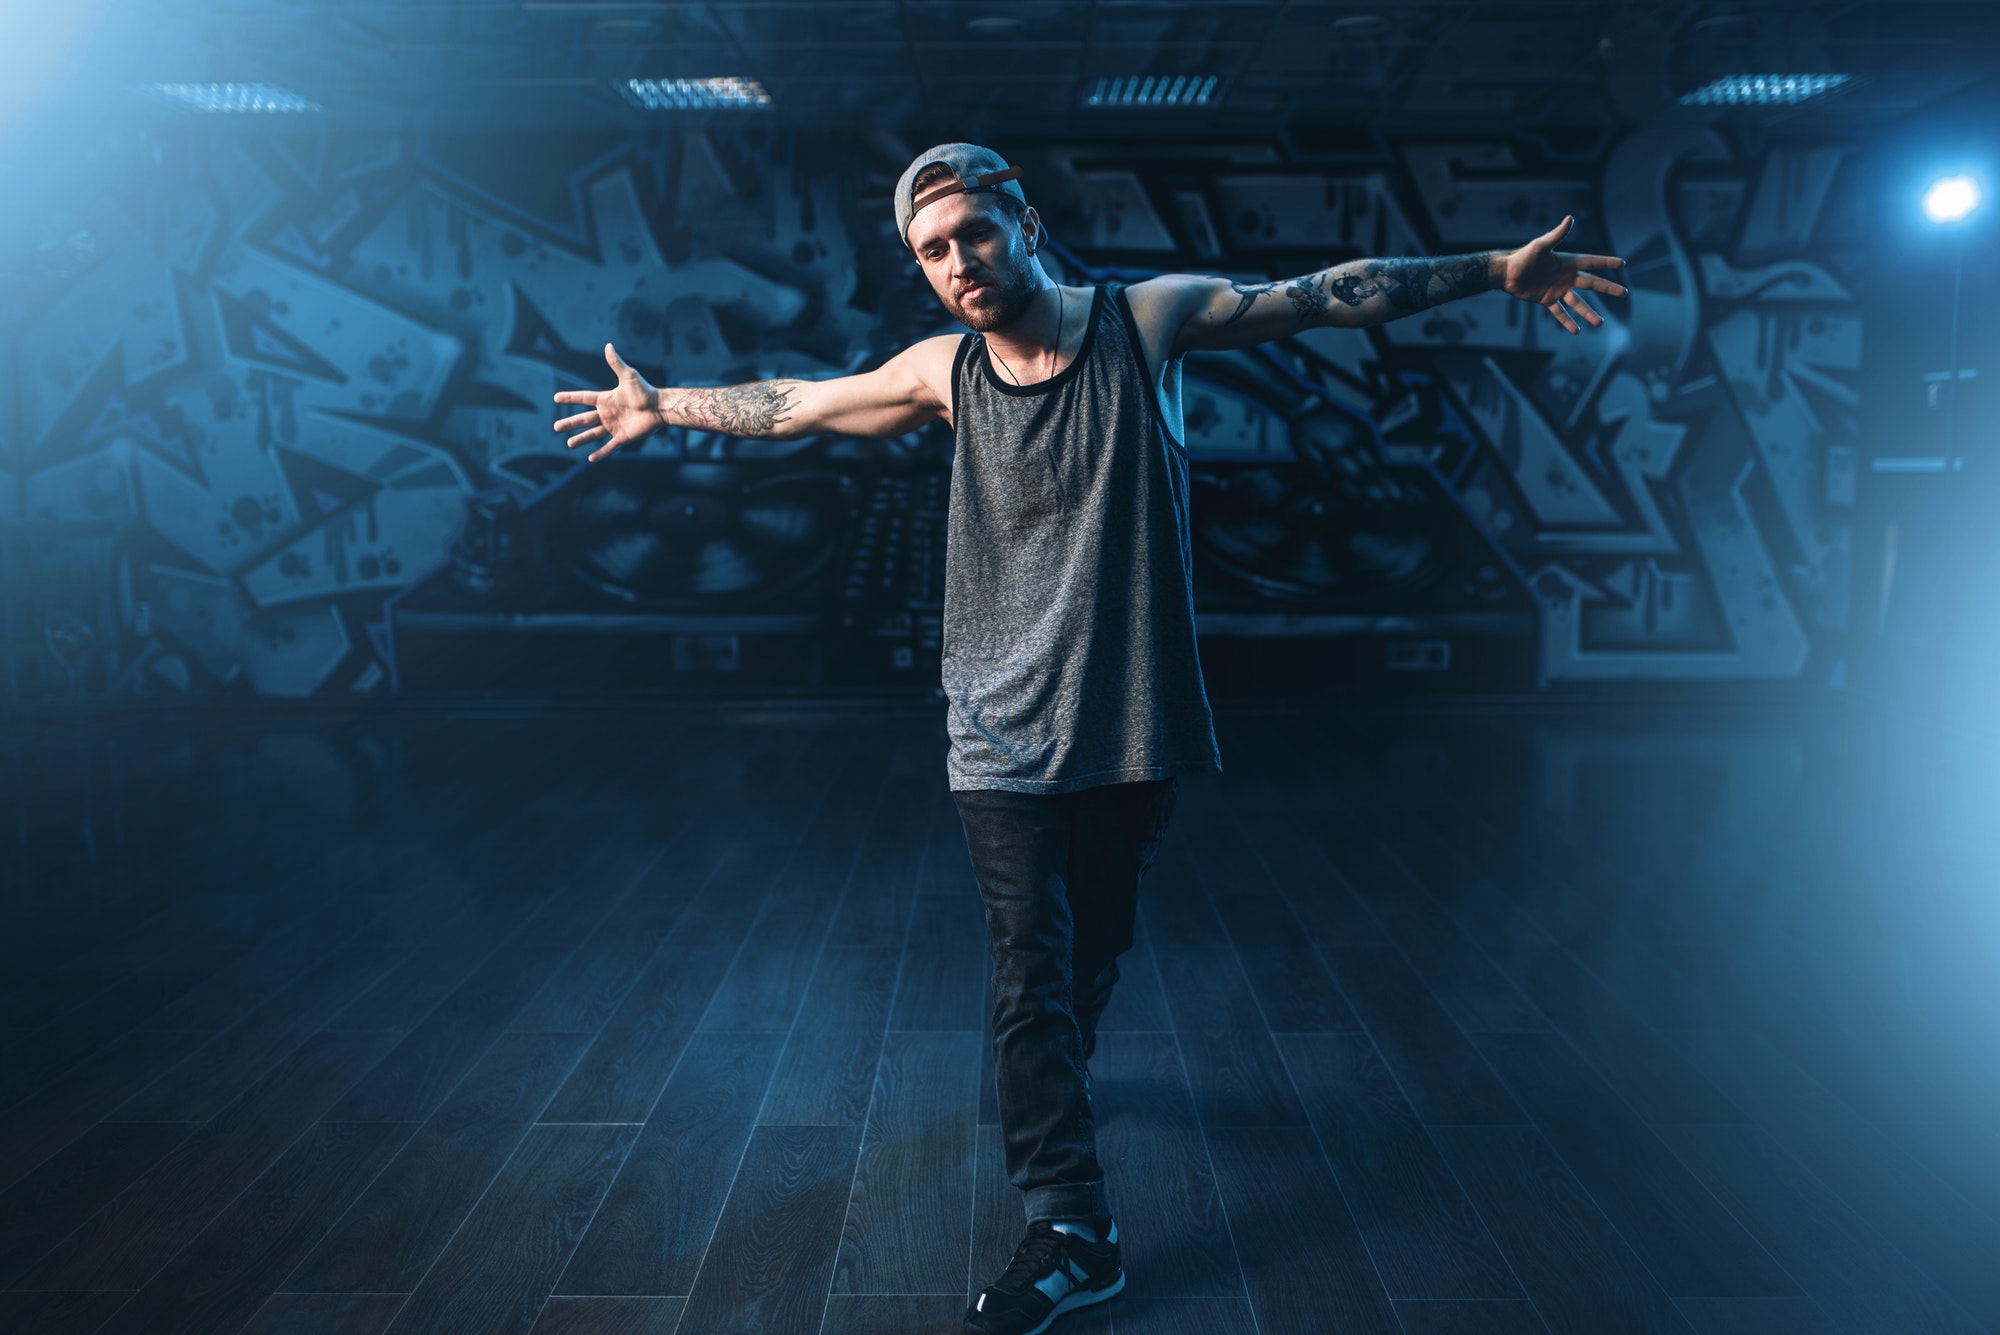 Male rapper in dance studio, trendy lifestyle